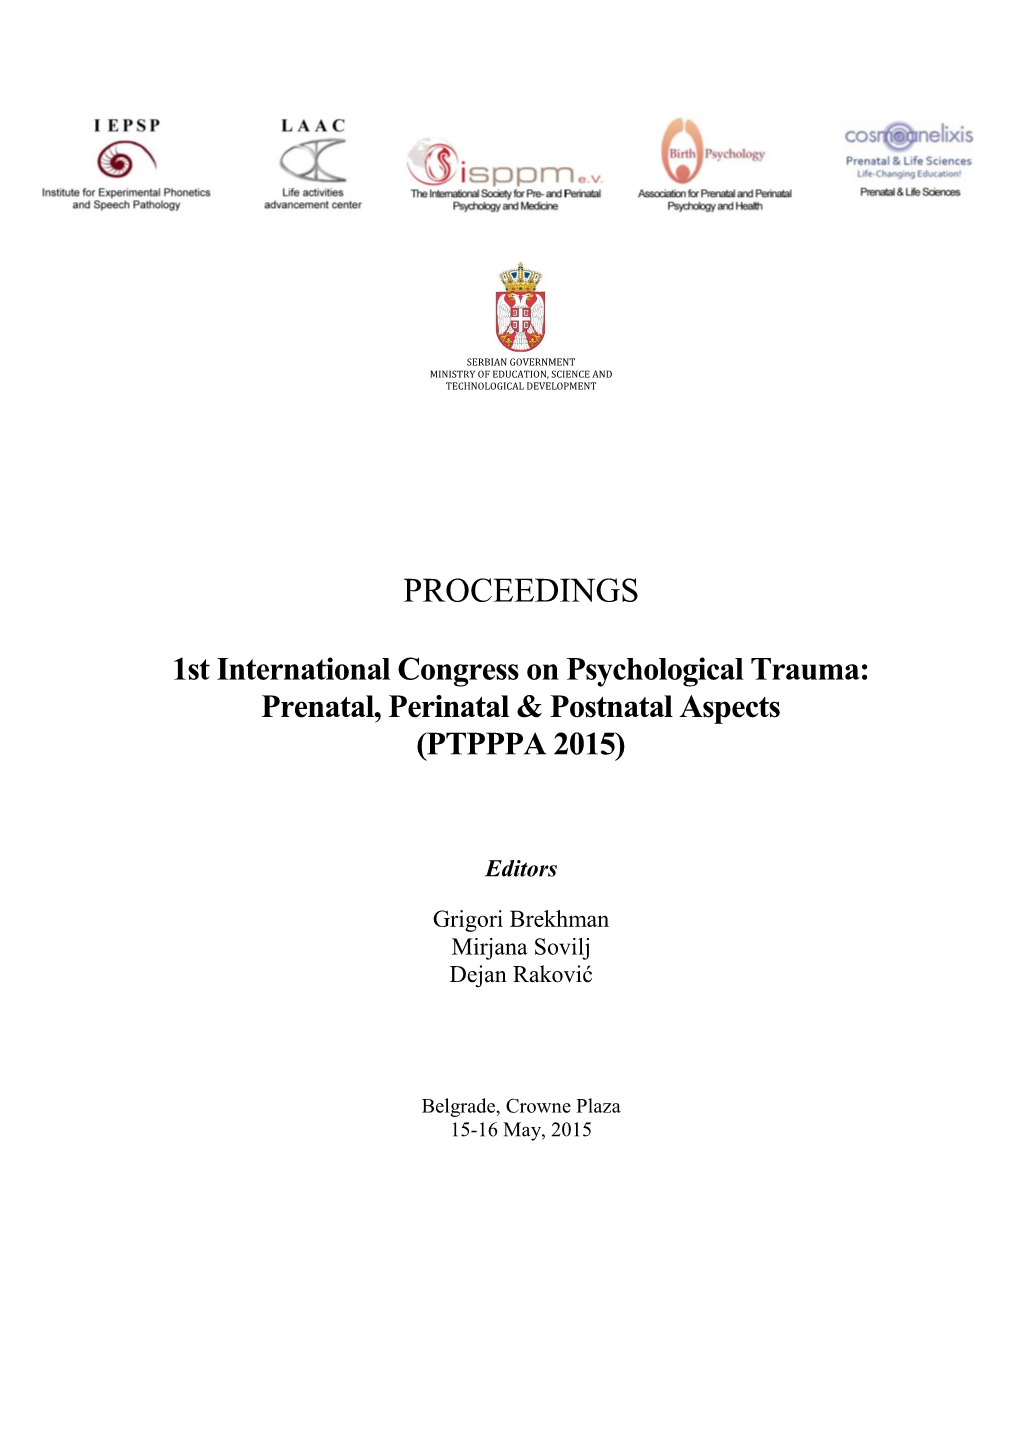 Psychological Trauma (PTPPPA 2015): Prenatal, Perinatal